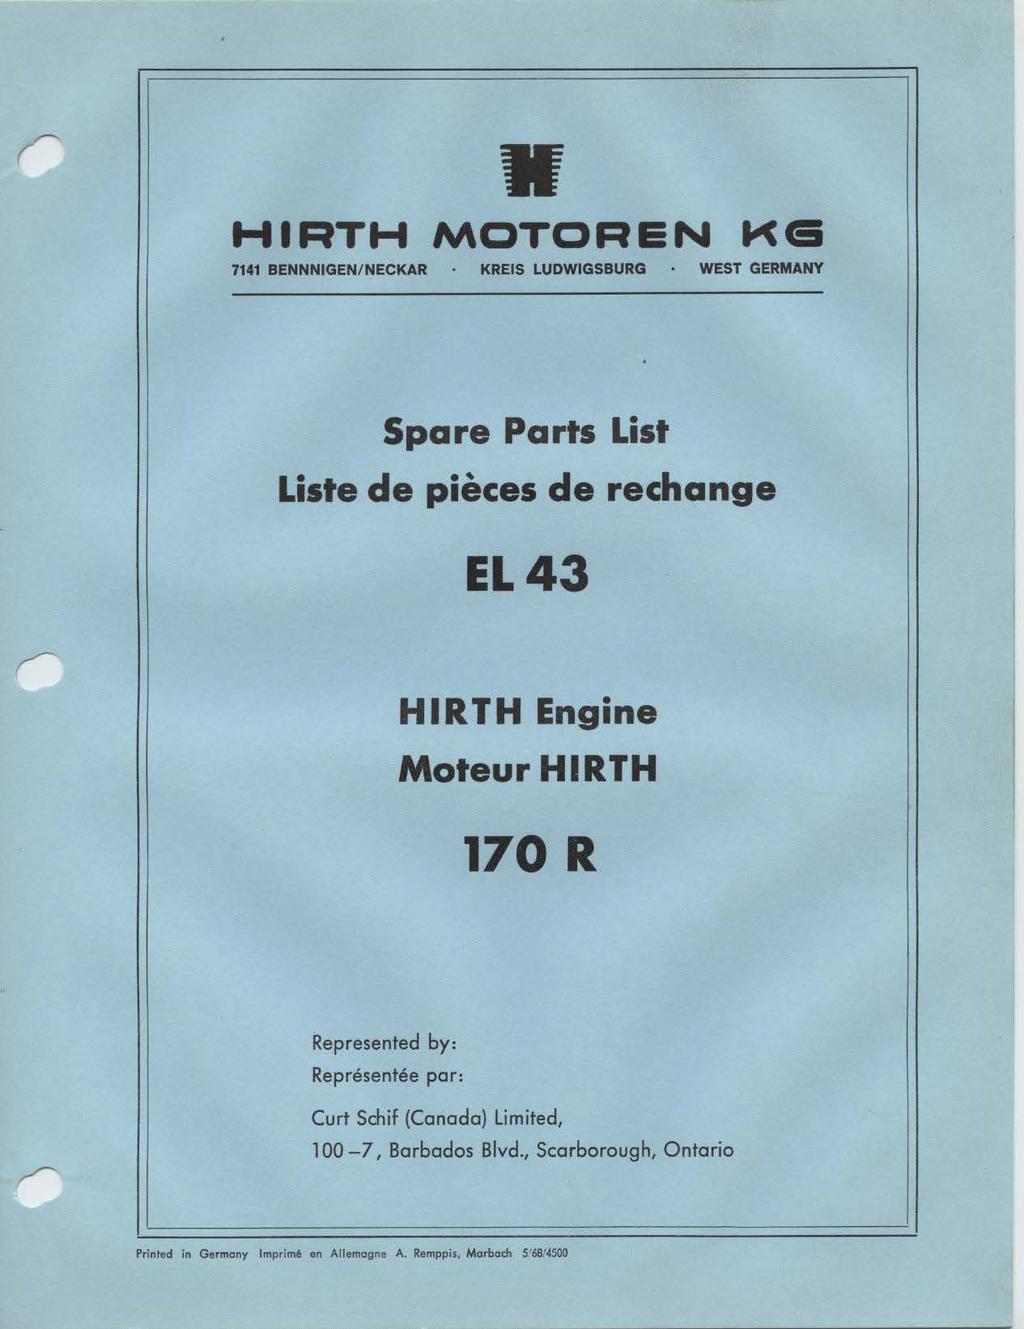 HRTH MCTOREN ~Ei 7141 BENNNGEN/NECKAR KRES LUDWGSBURG WEST GERMANY Spare Parts List Liste de pieces de rechange EL43 HRTH Engine Moteur HRTH 170 R Represented